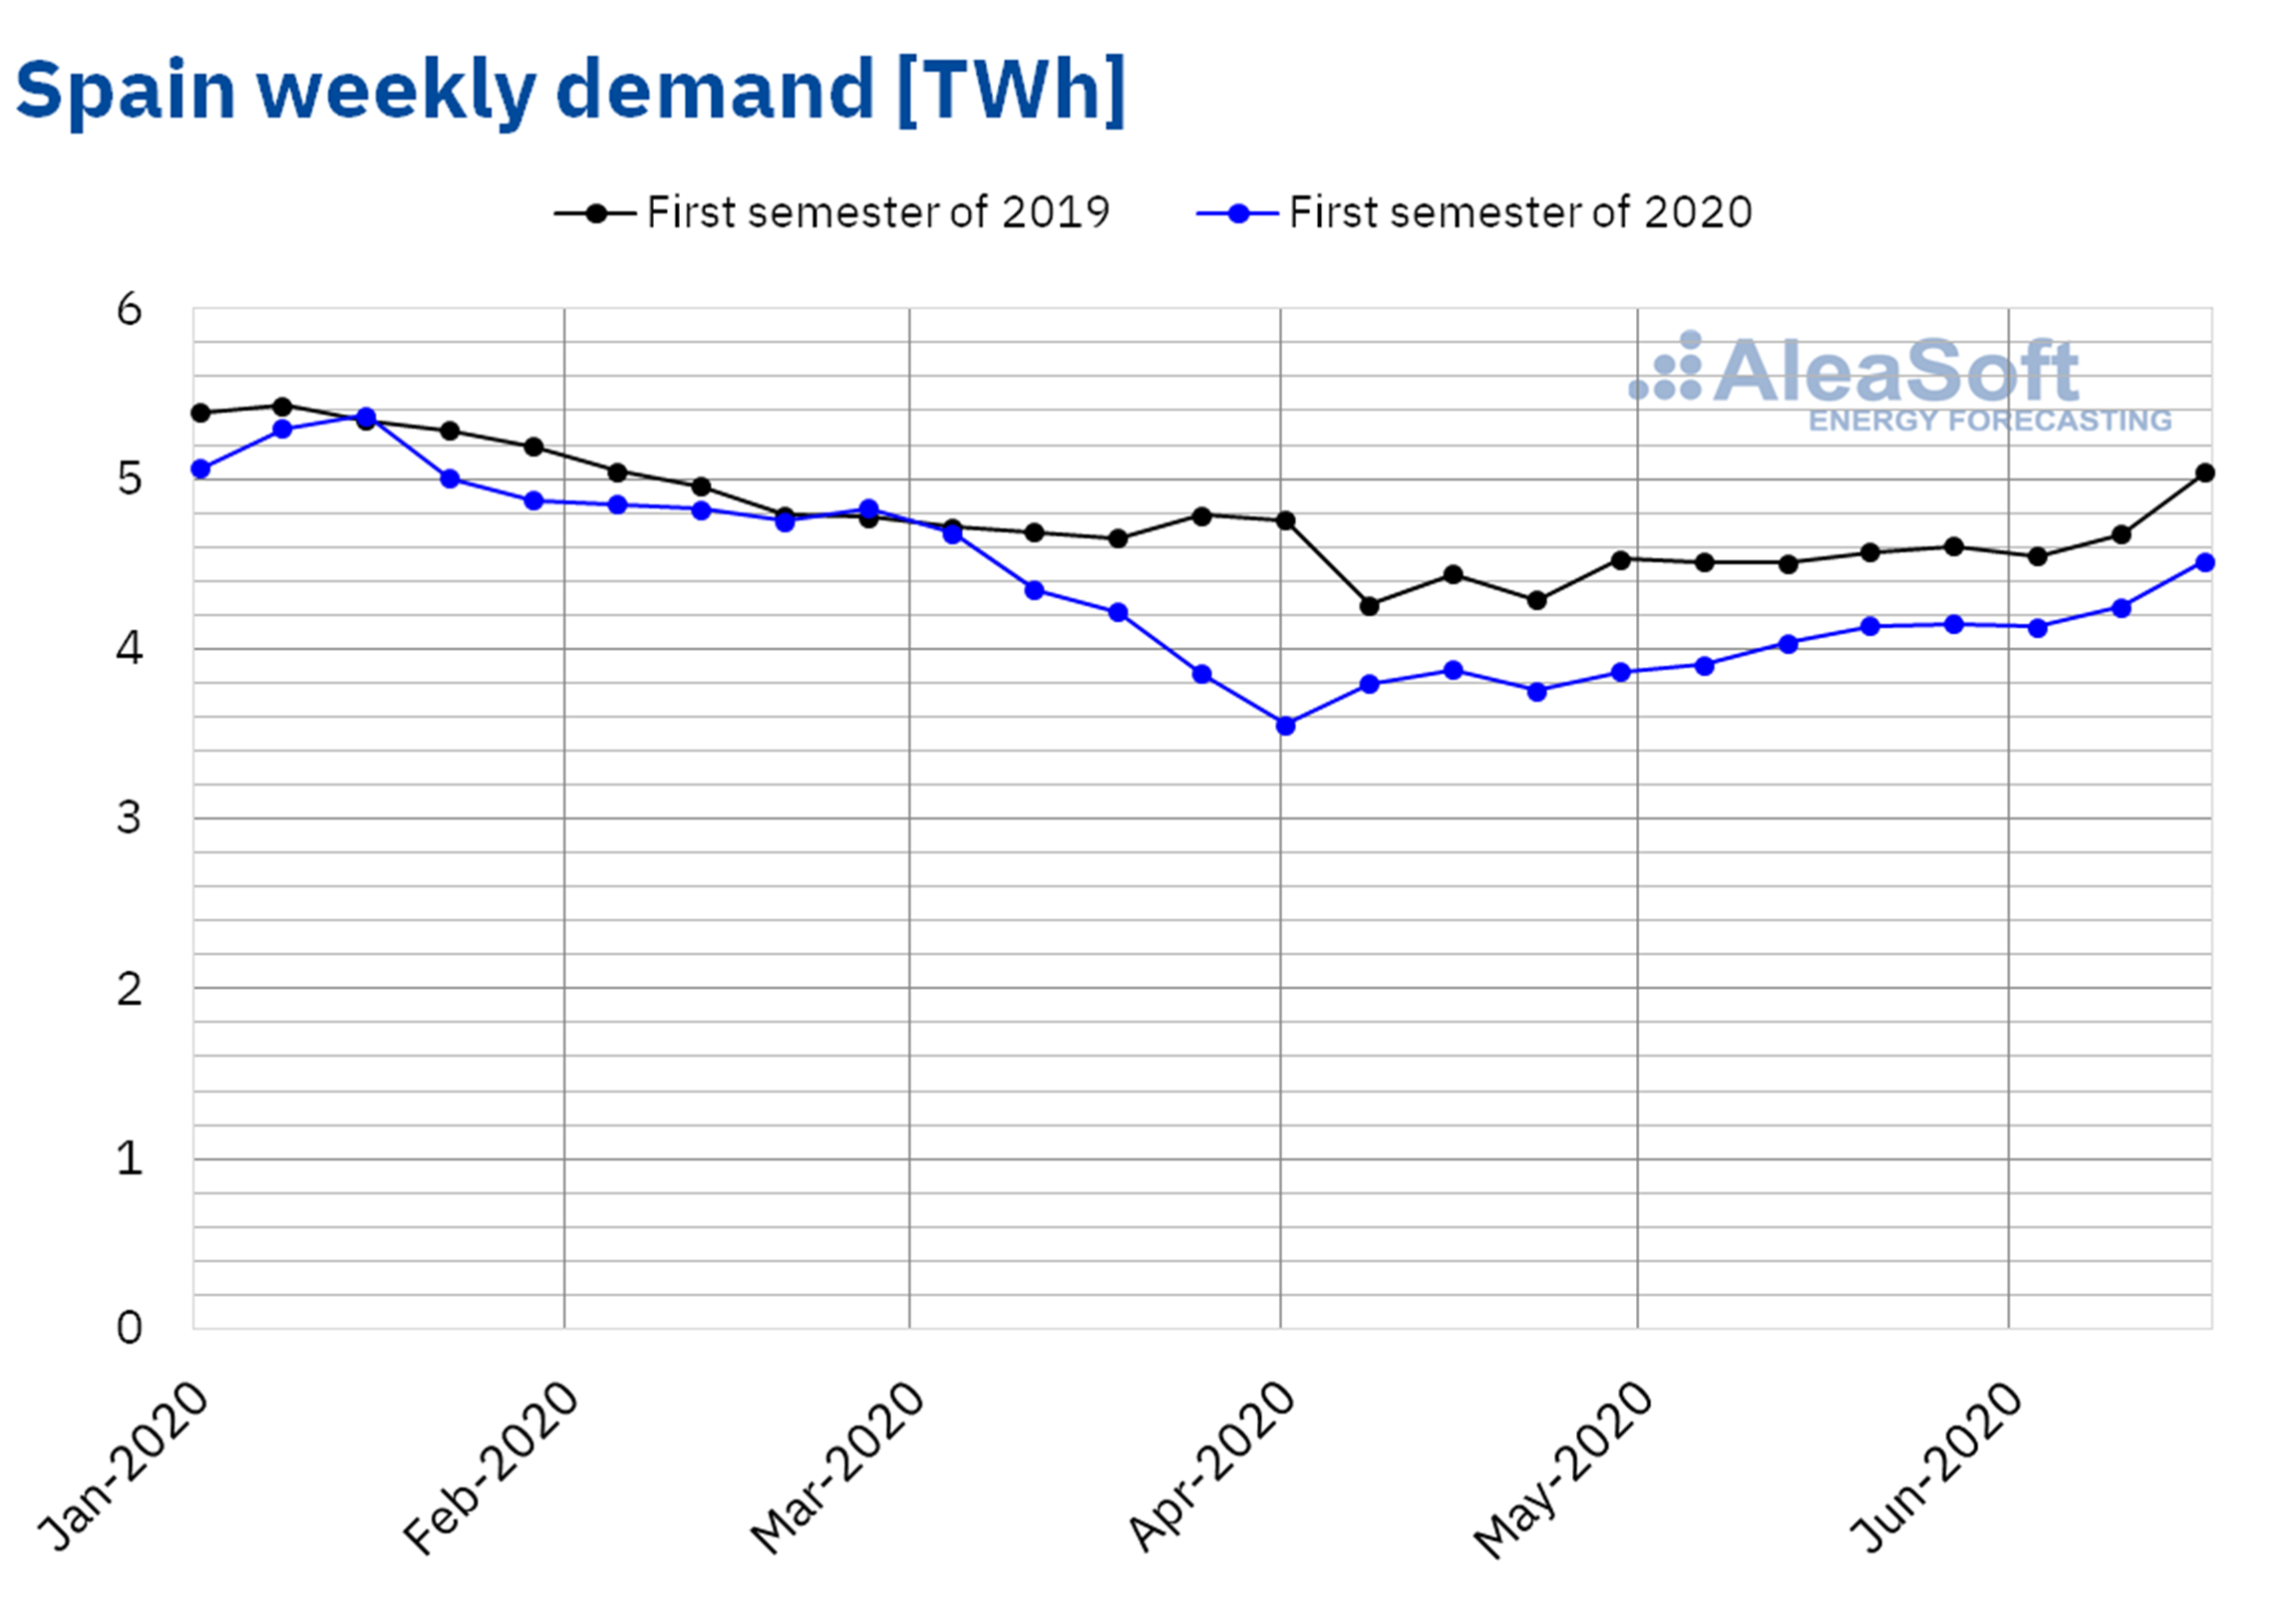 AleaSoft - Weekly electricity demand Spain